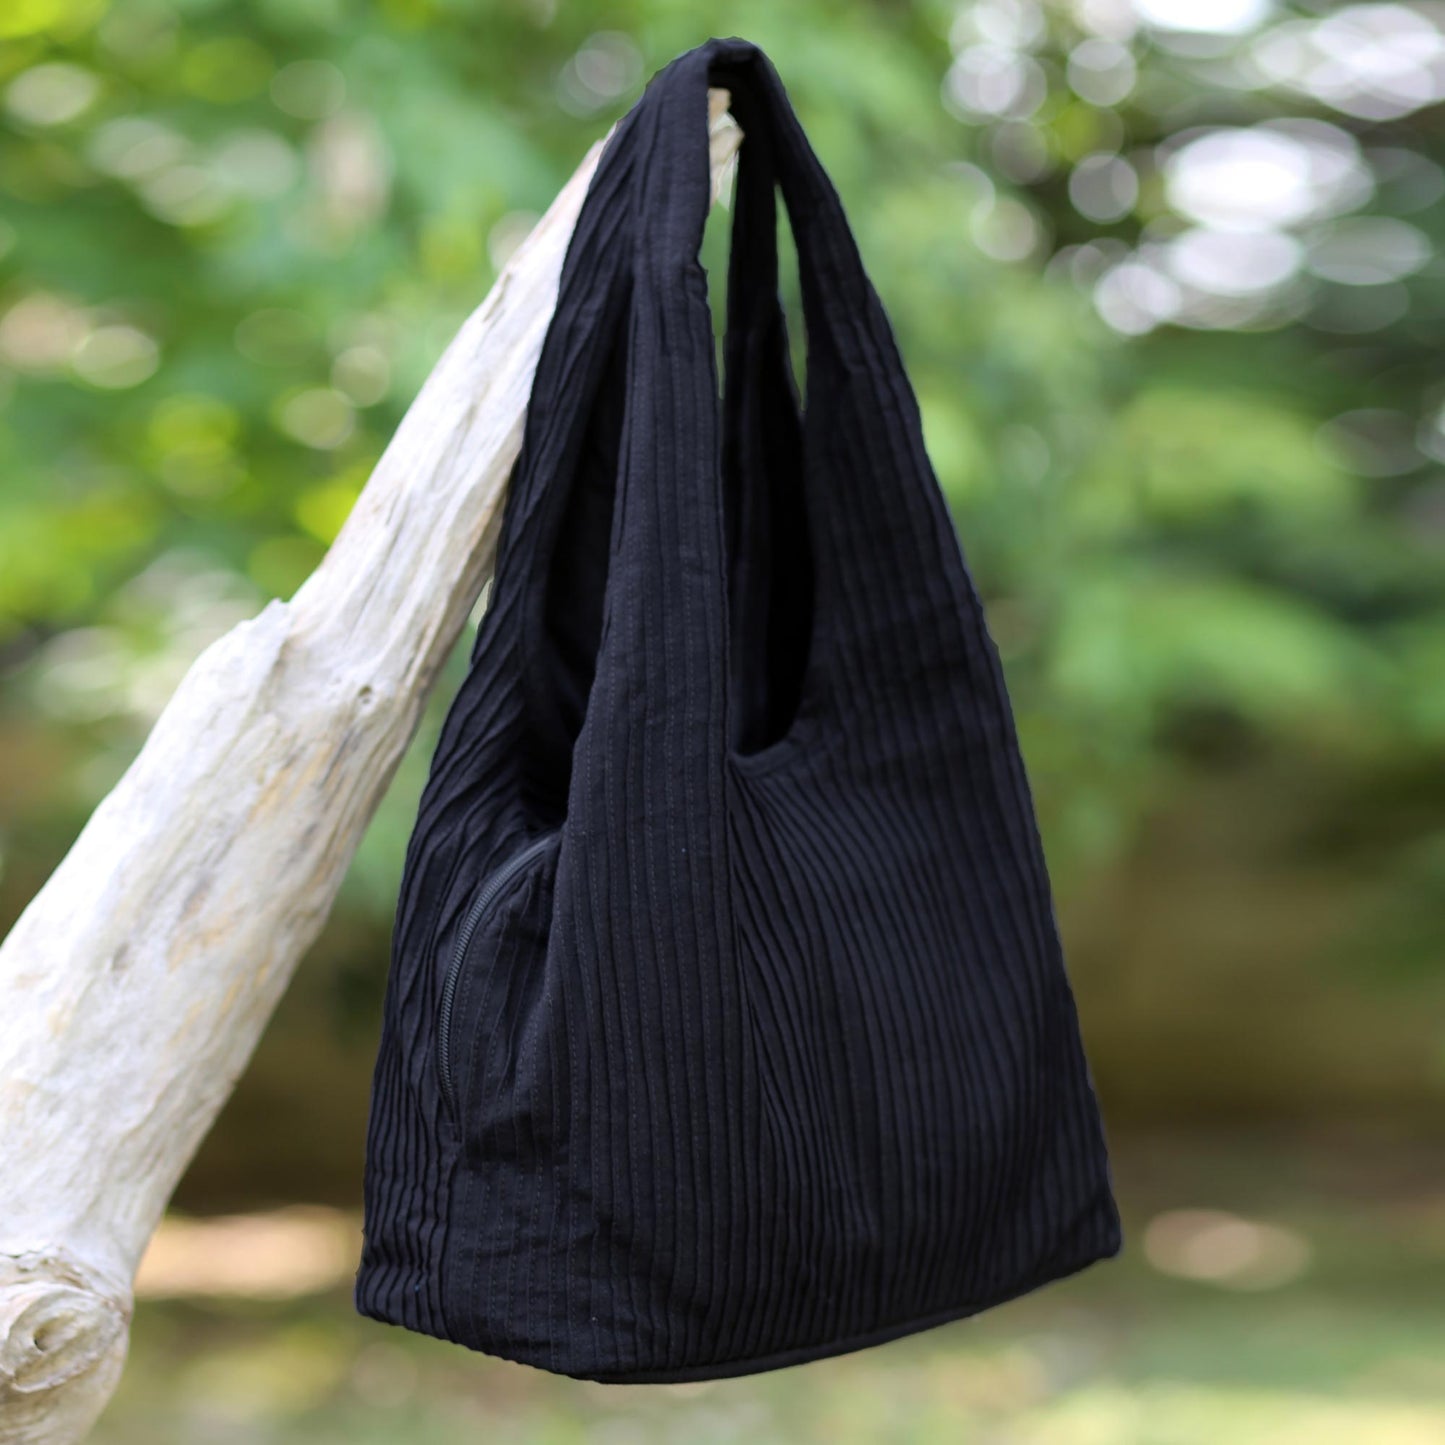 Thai Texture in Black 100% Cotton Textured Shoulder Bag in Black from Thailand